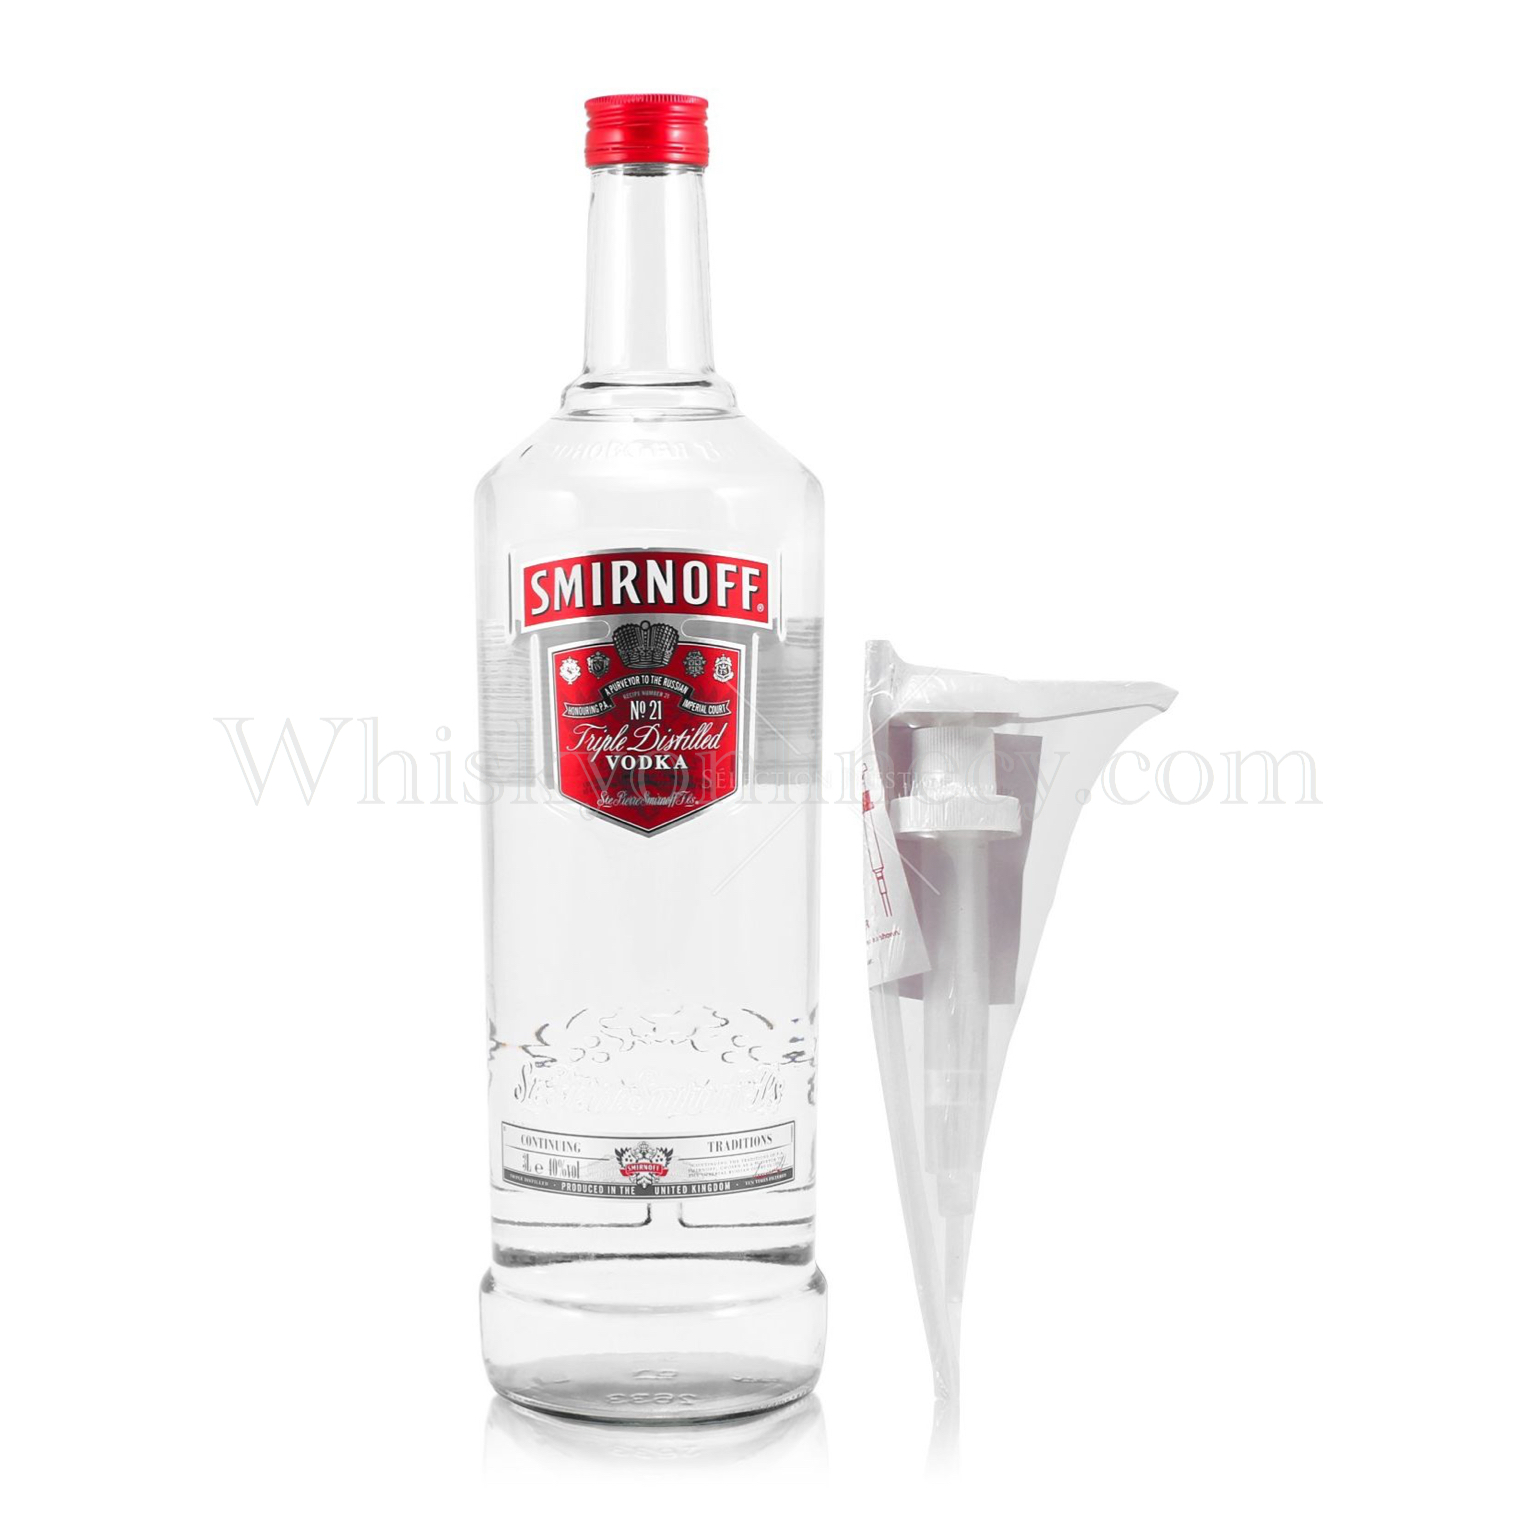 https://whiskyonlinecy.com/wp-content/uploads/2019/06/Smirnoff-Red-Vodka-3L-40.jpg